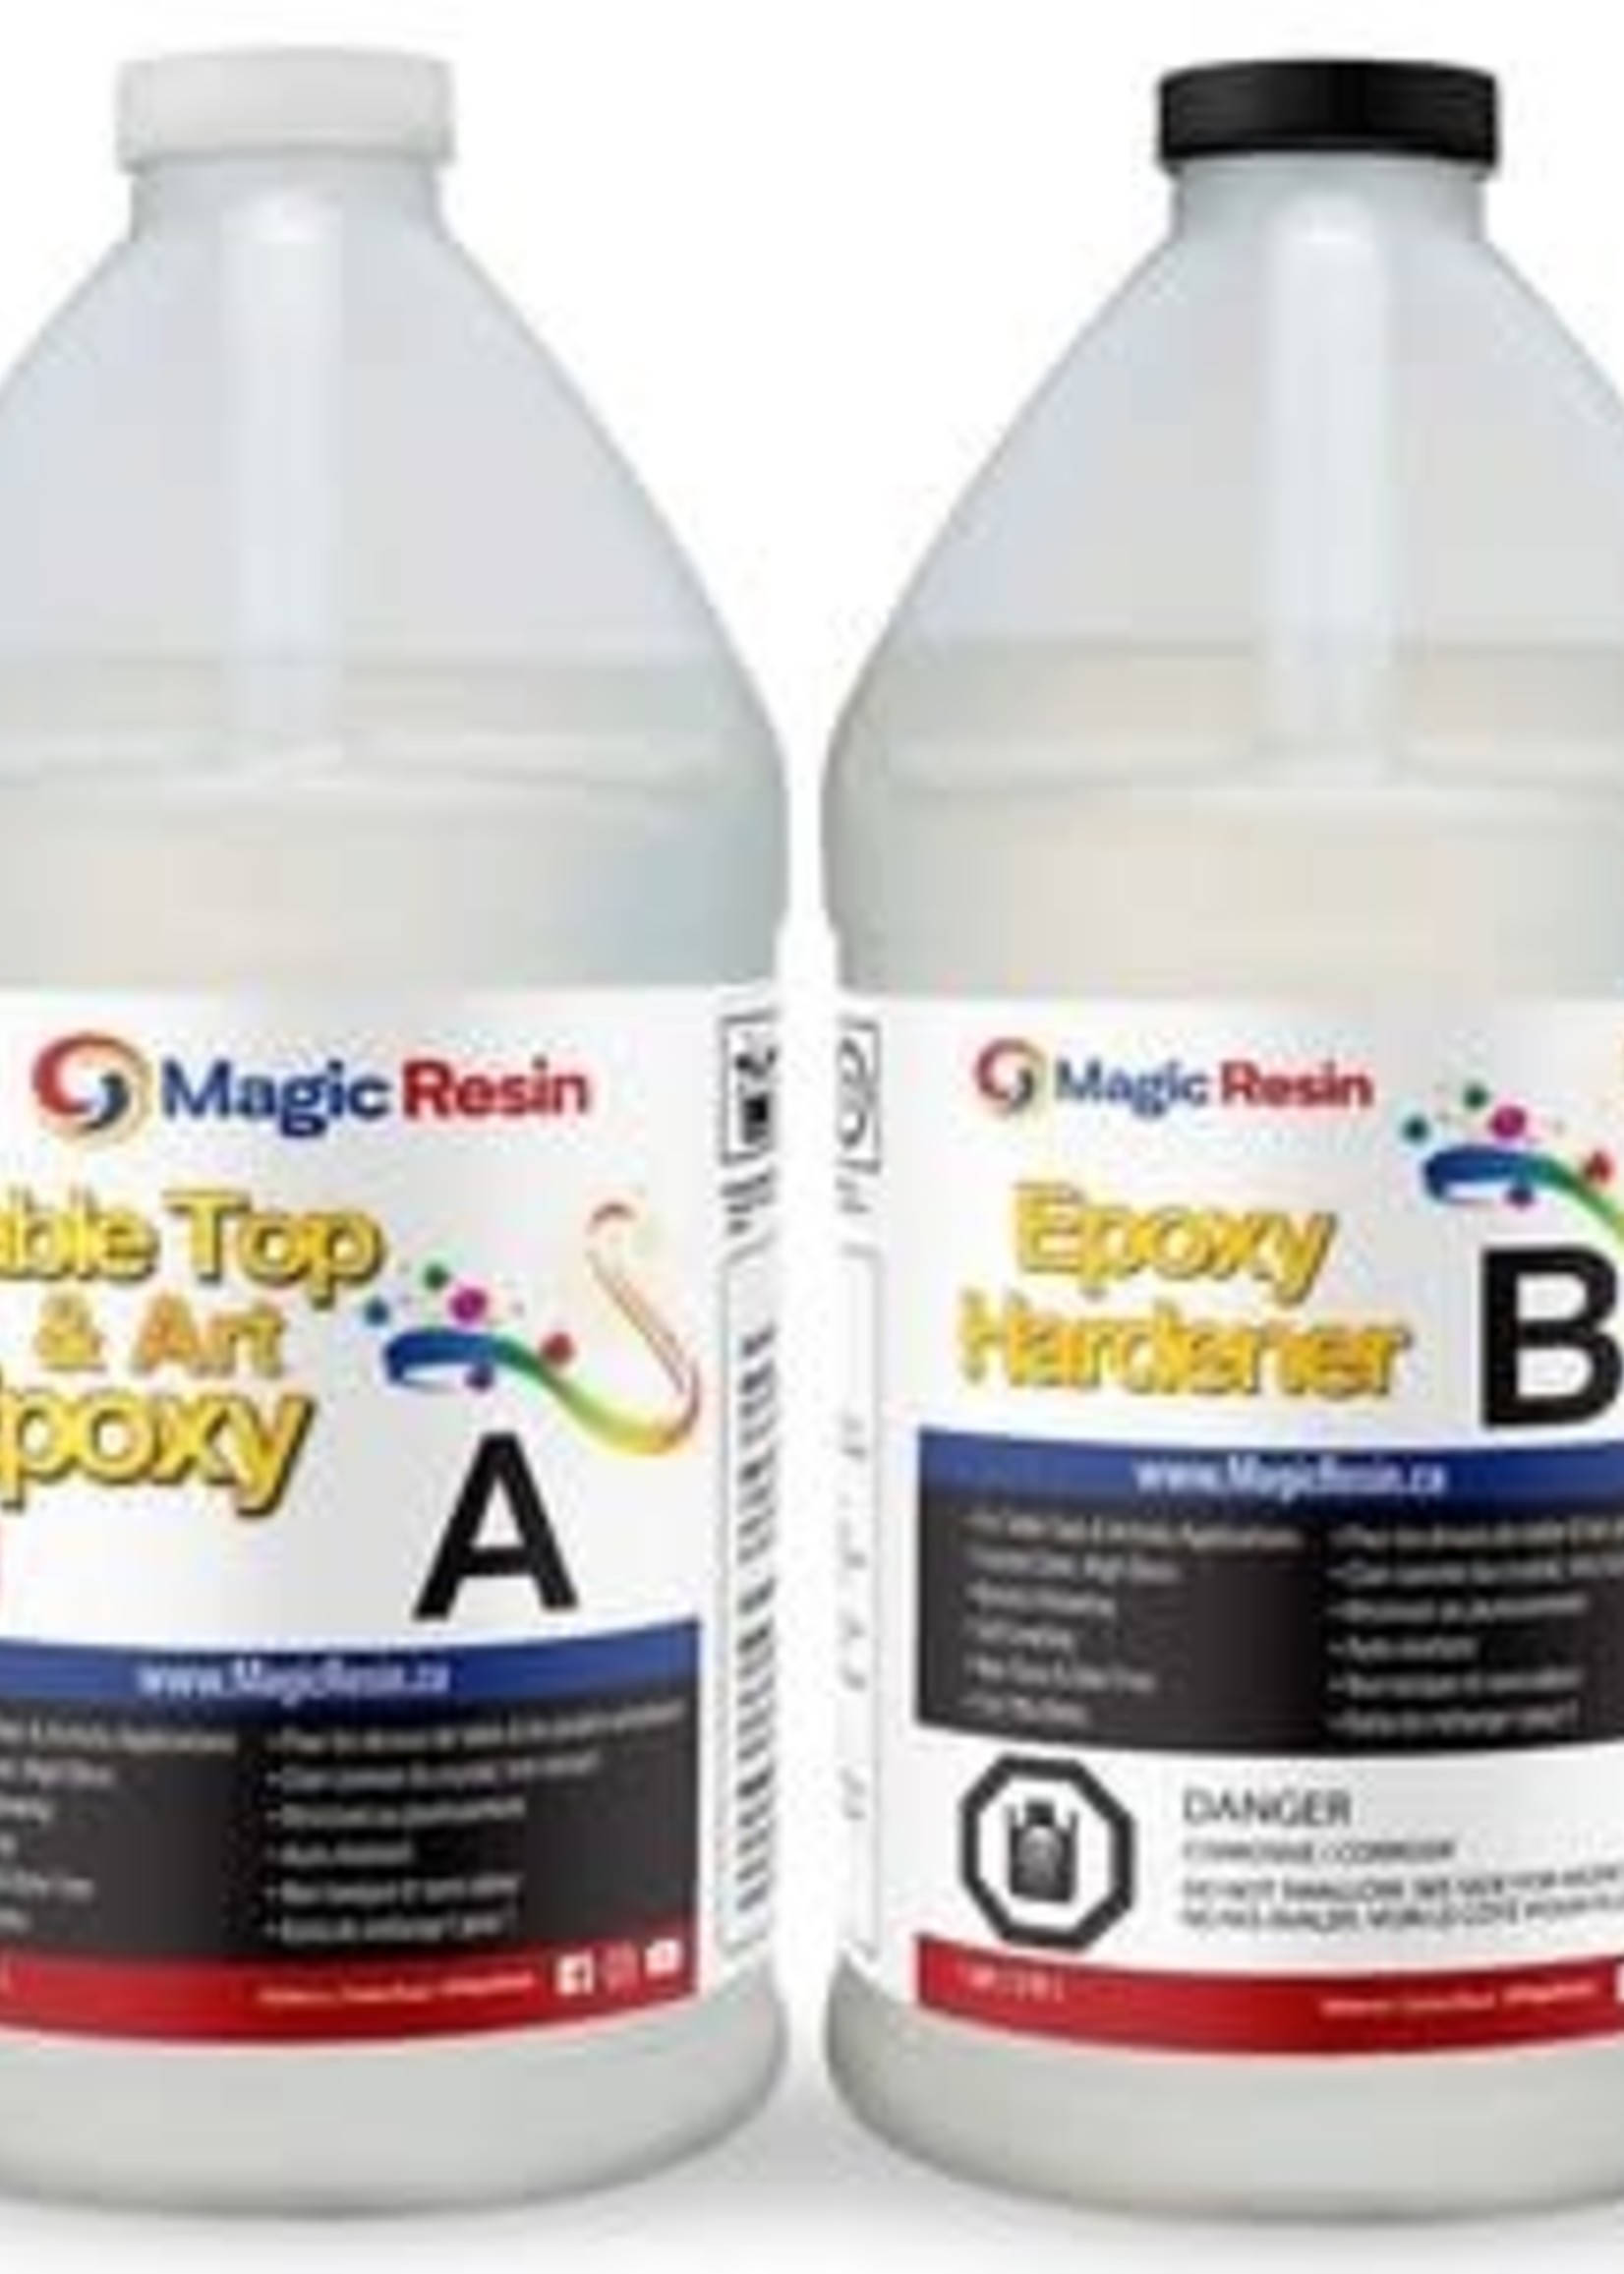 Magic Resin 2 Gallon (7.6 L) | Table Top & Art Clear Coating Epoxy Resin Kit